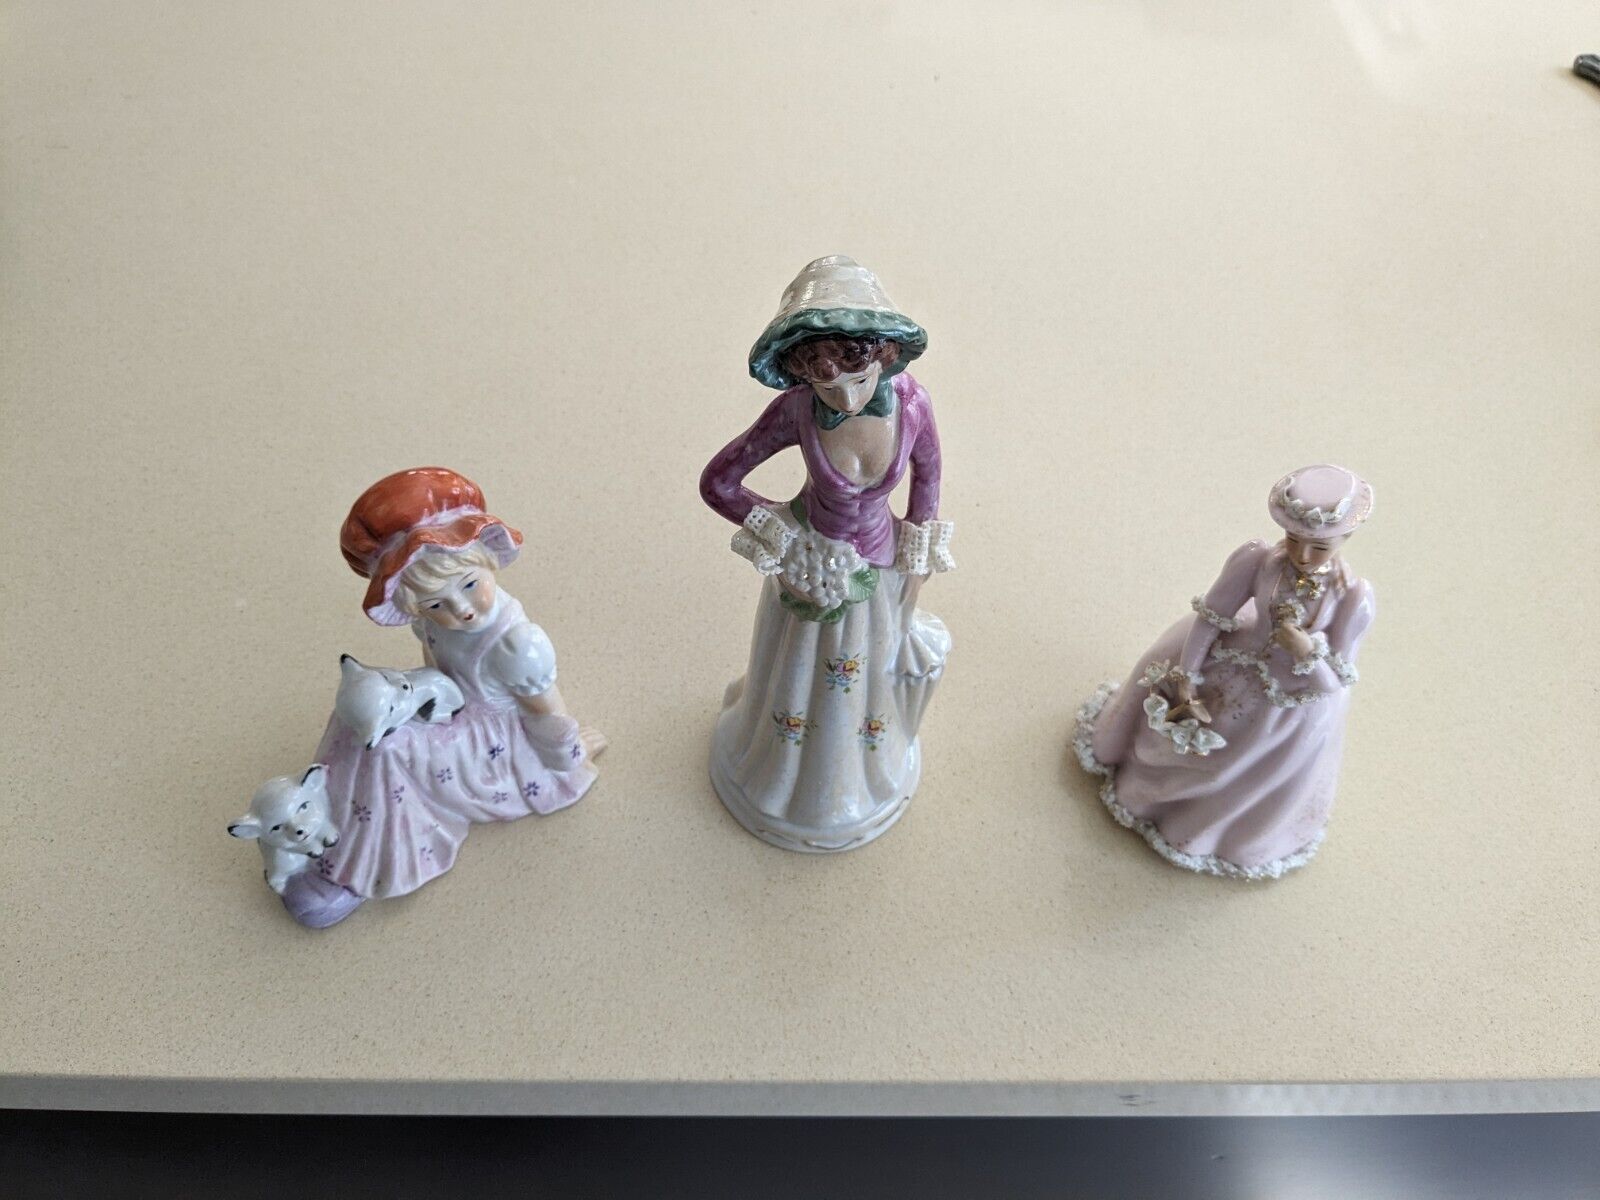 3 Vintage Porcelain/Ceramic Figurines. Umbrella Missing From Fenton One